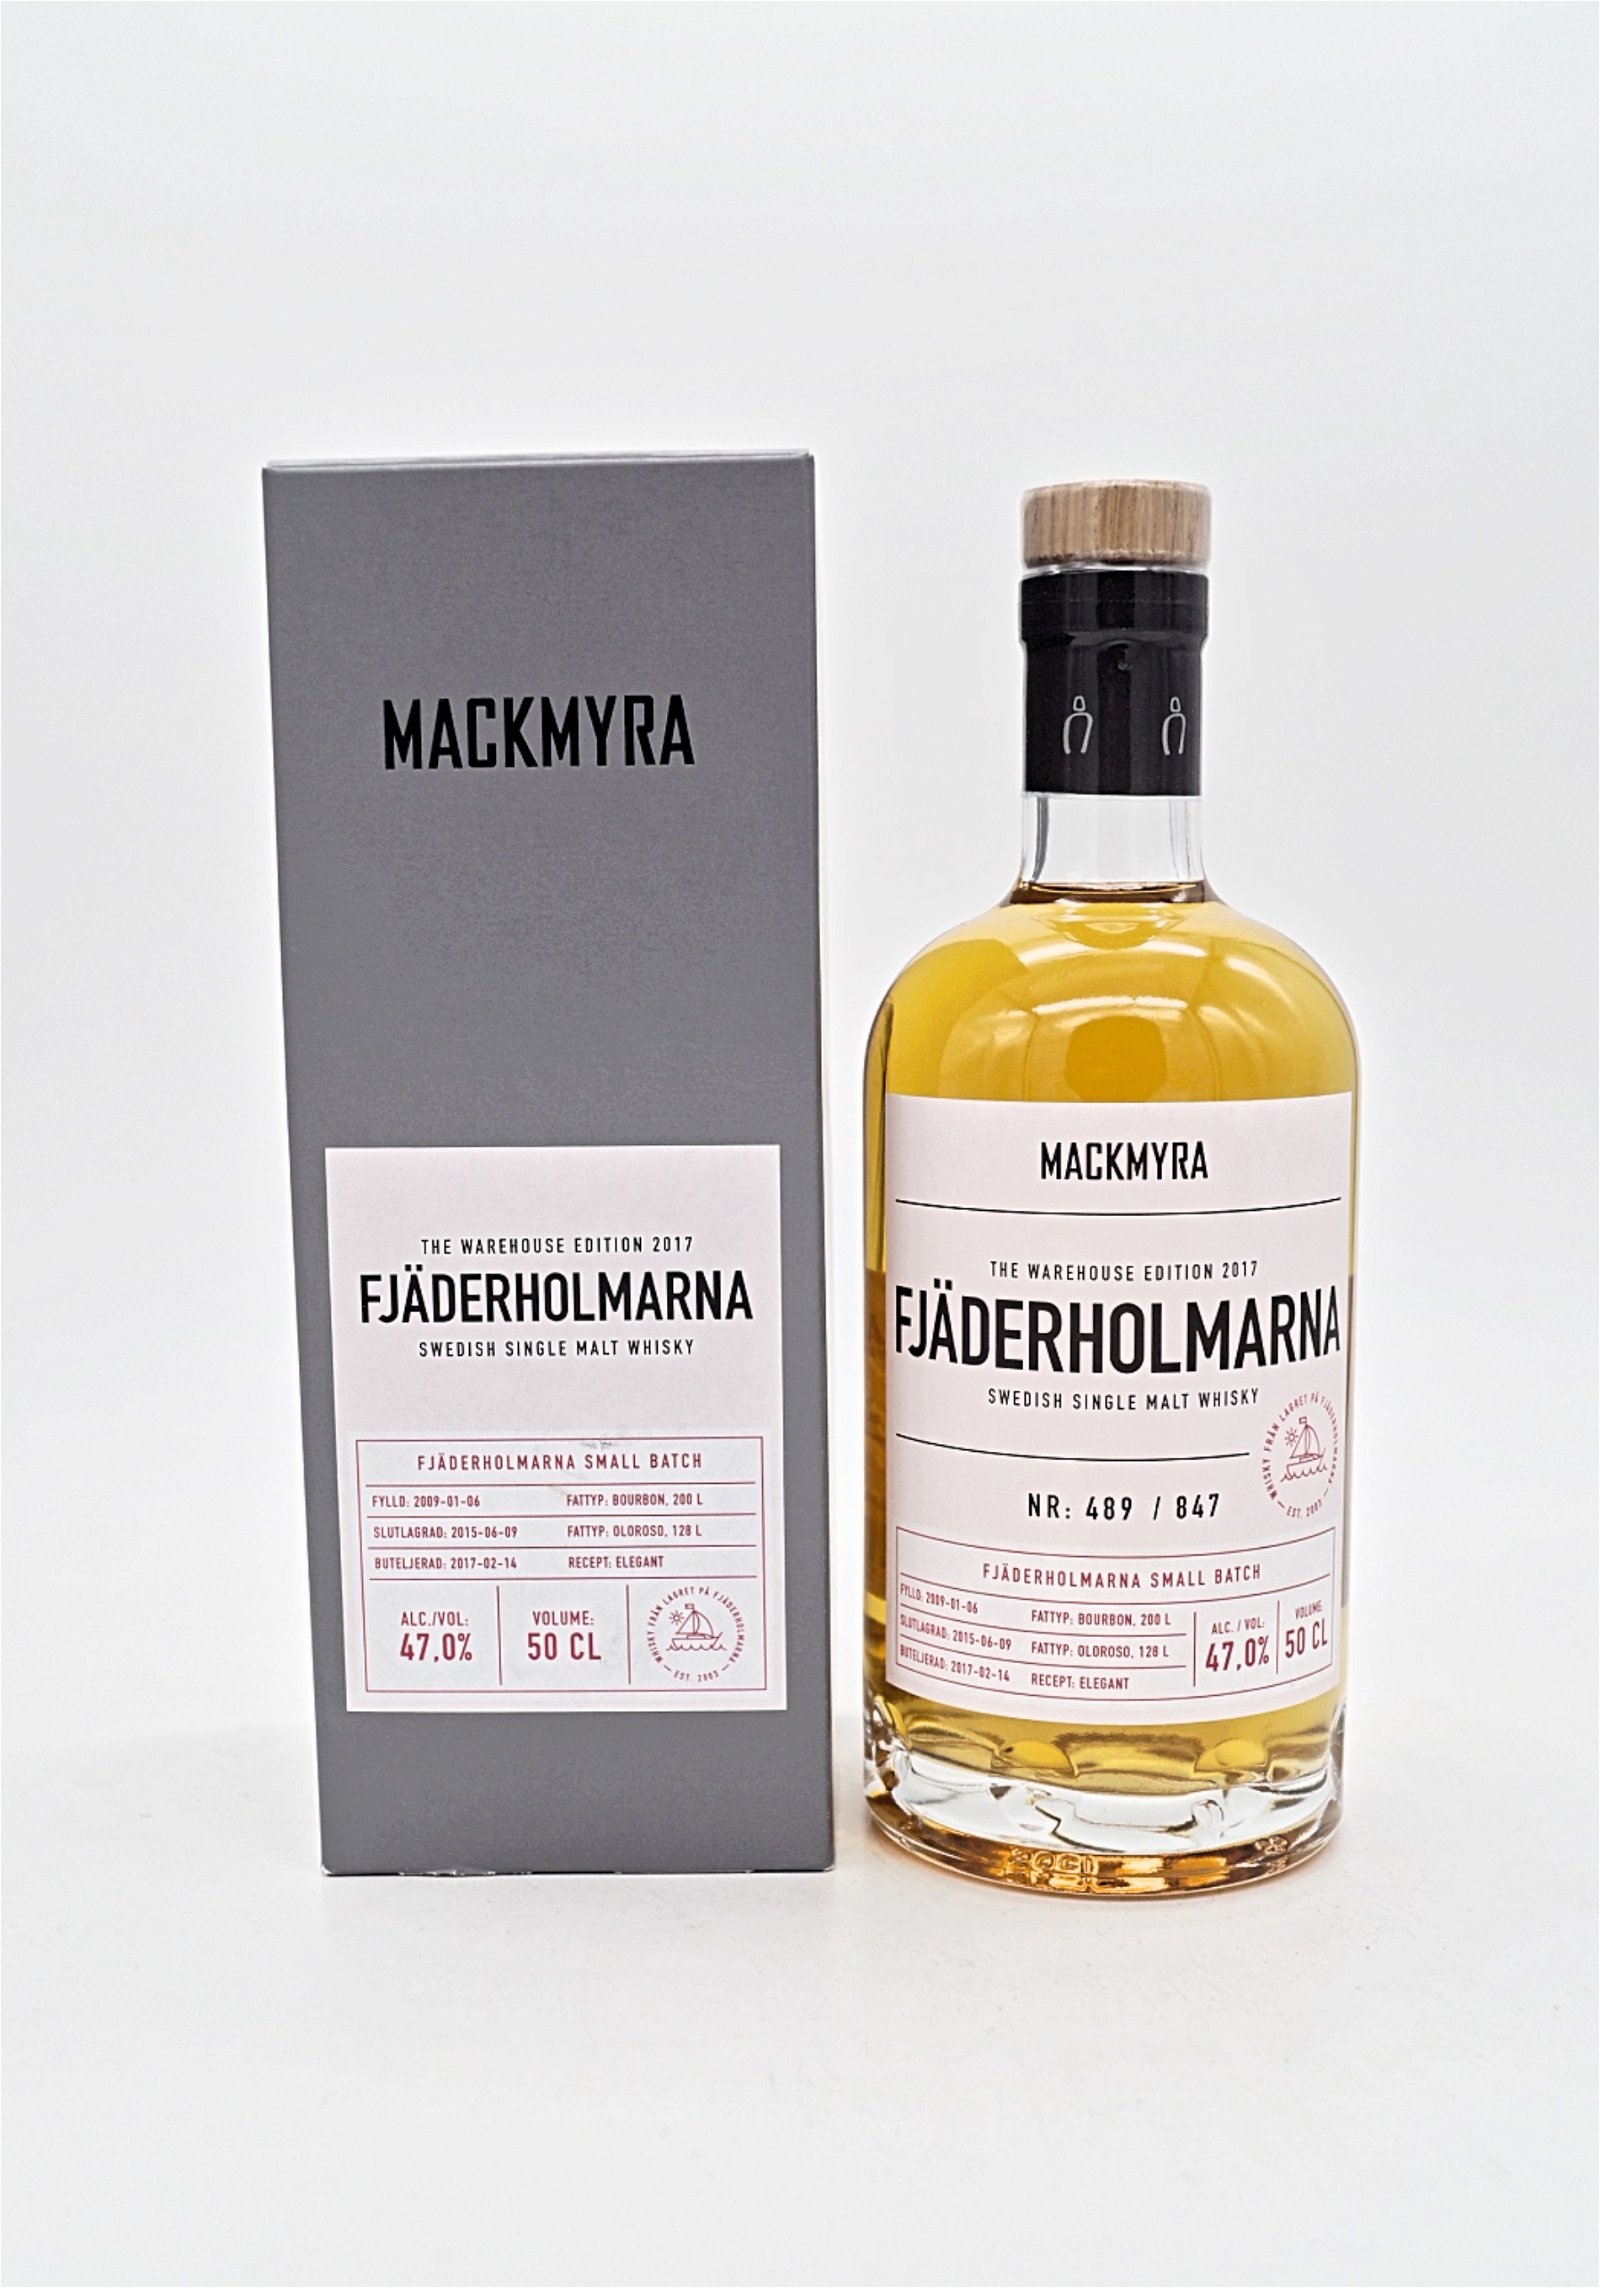 Mackmyra Fjäderholmarna Warehouse Edition2017 Swedish Single Malt Whisky